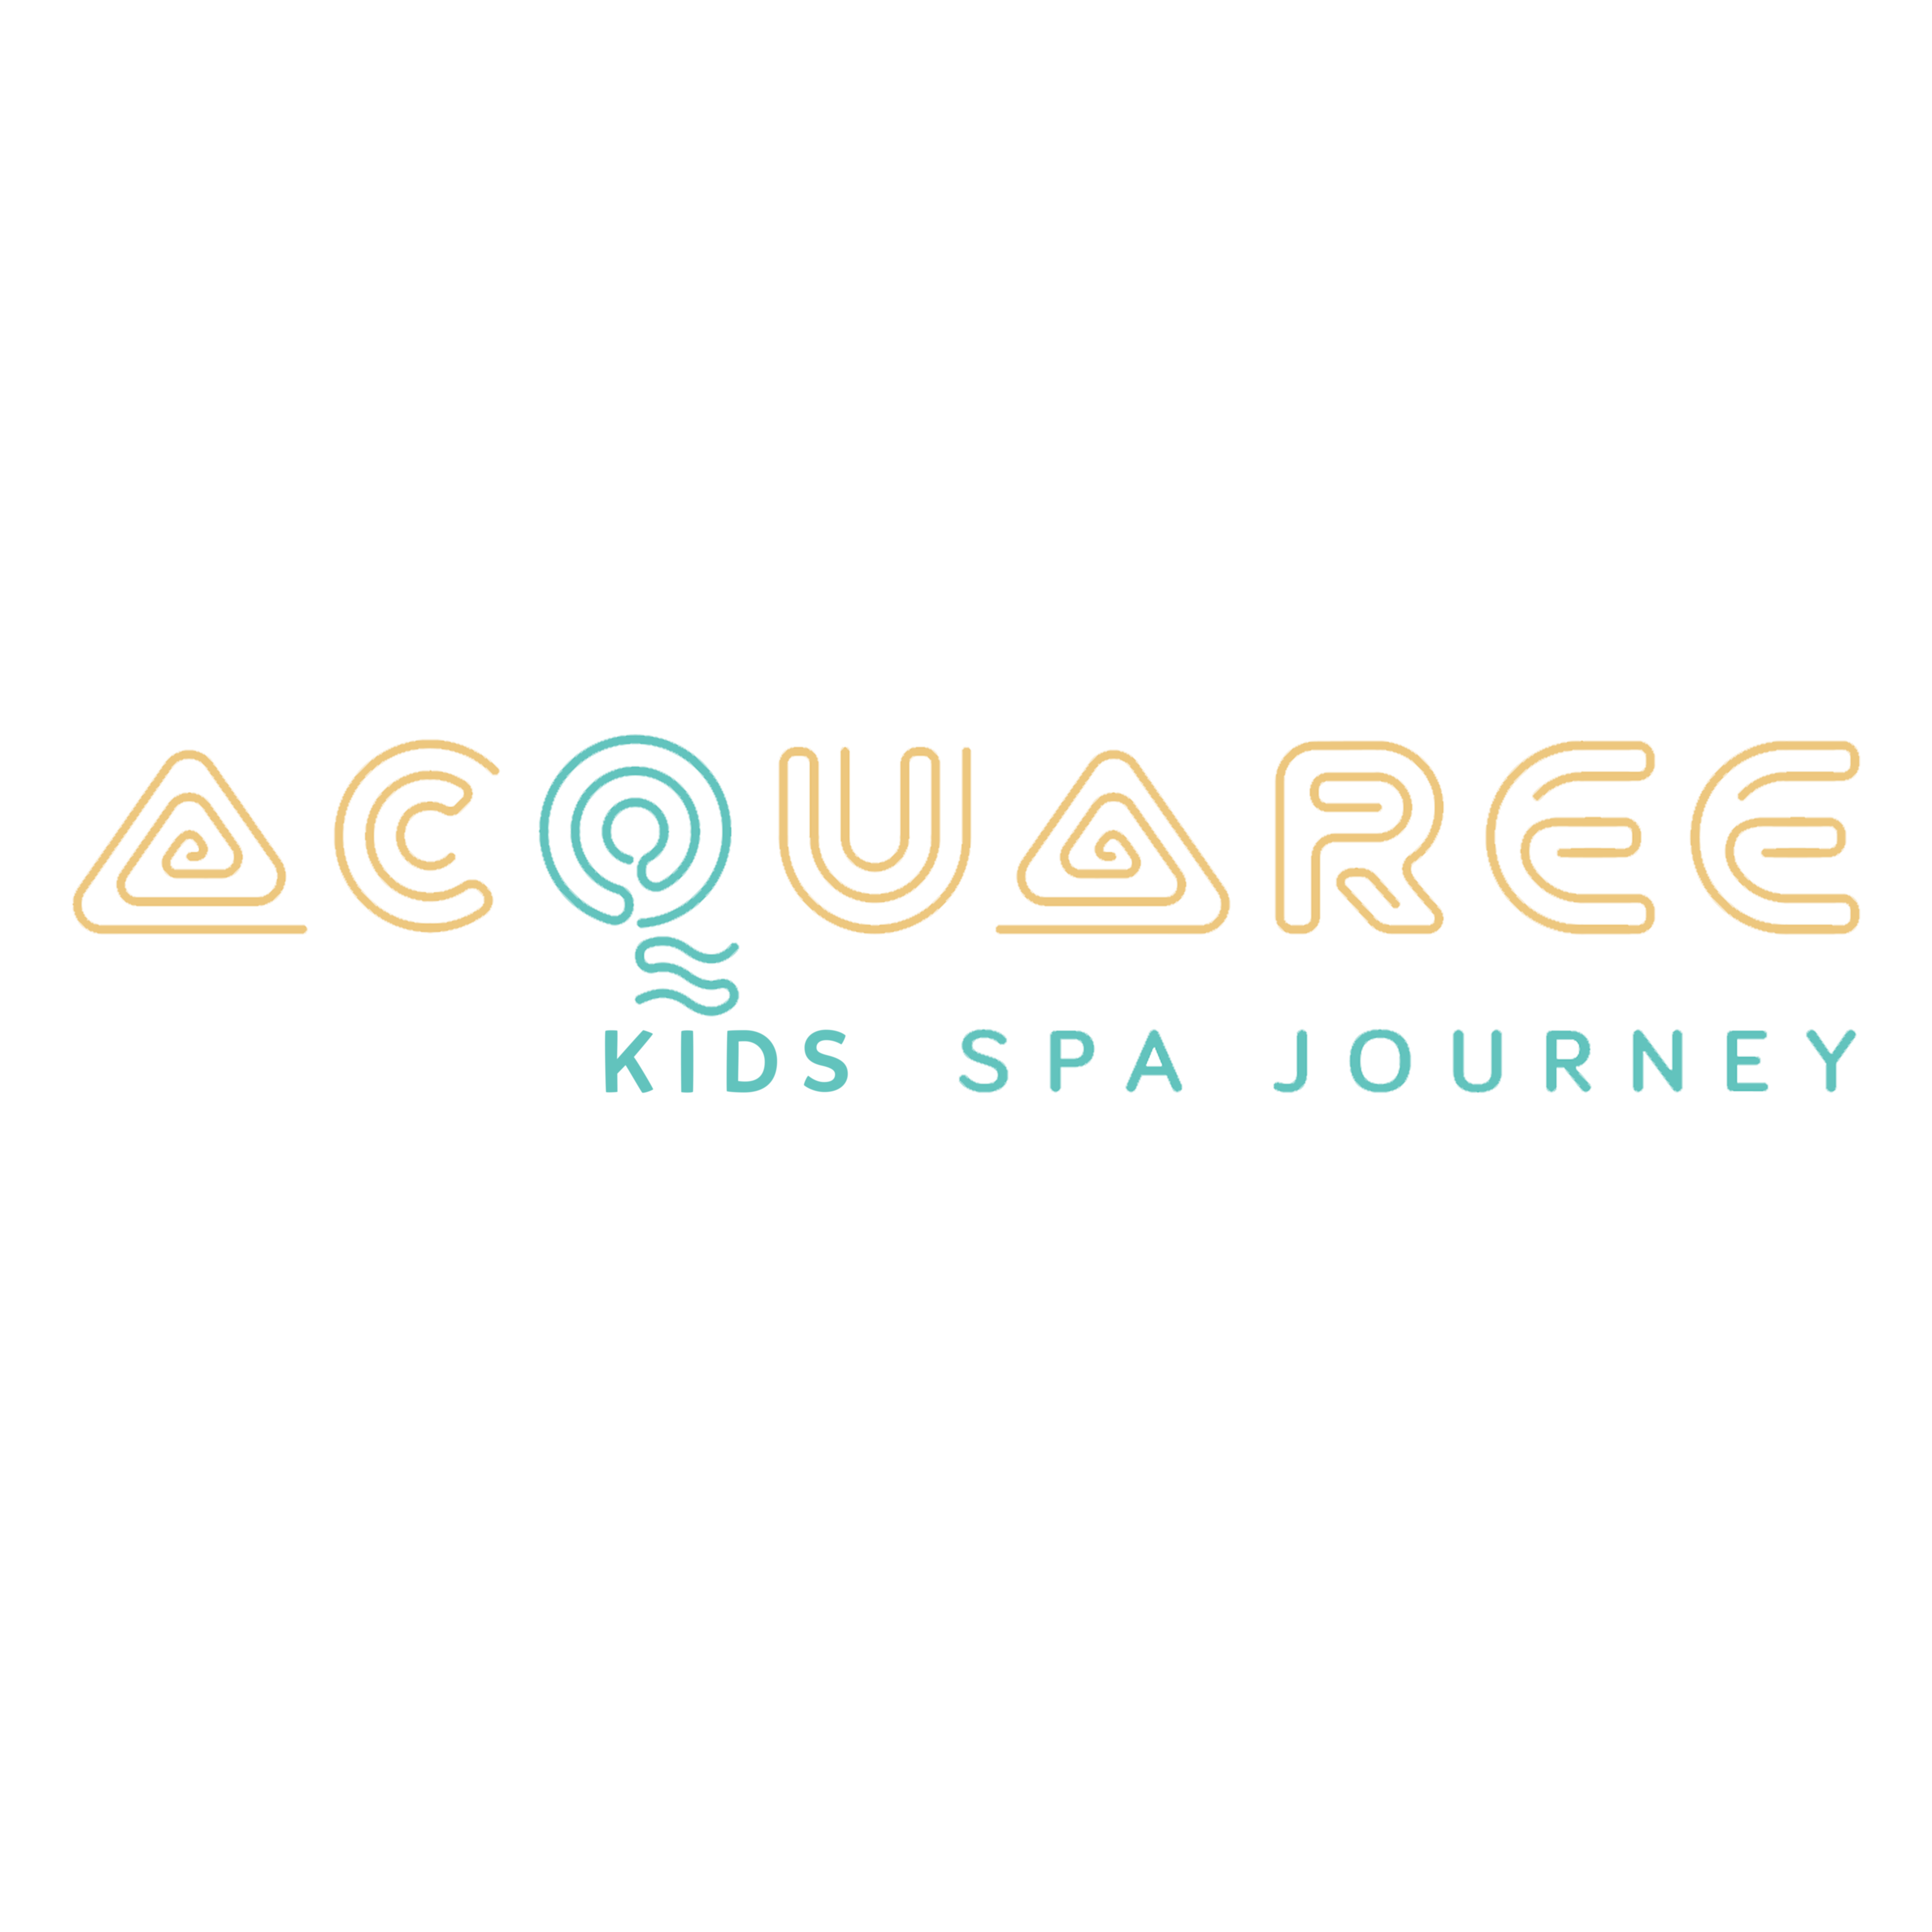 Acquaree Spa Journey